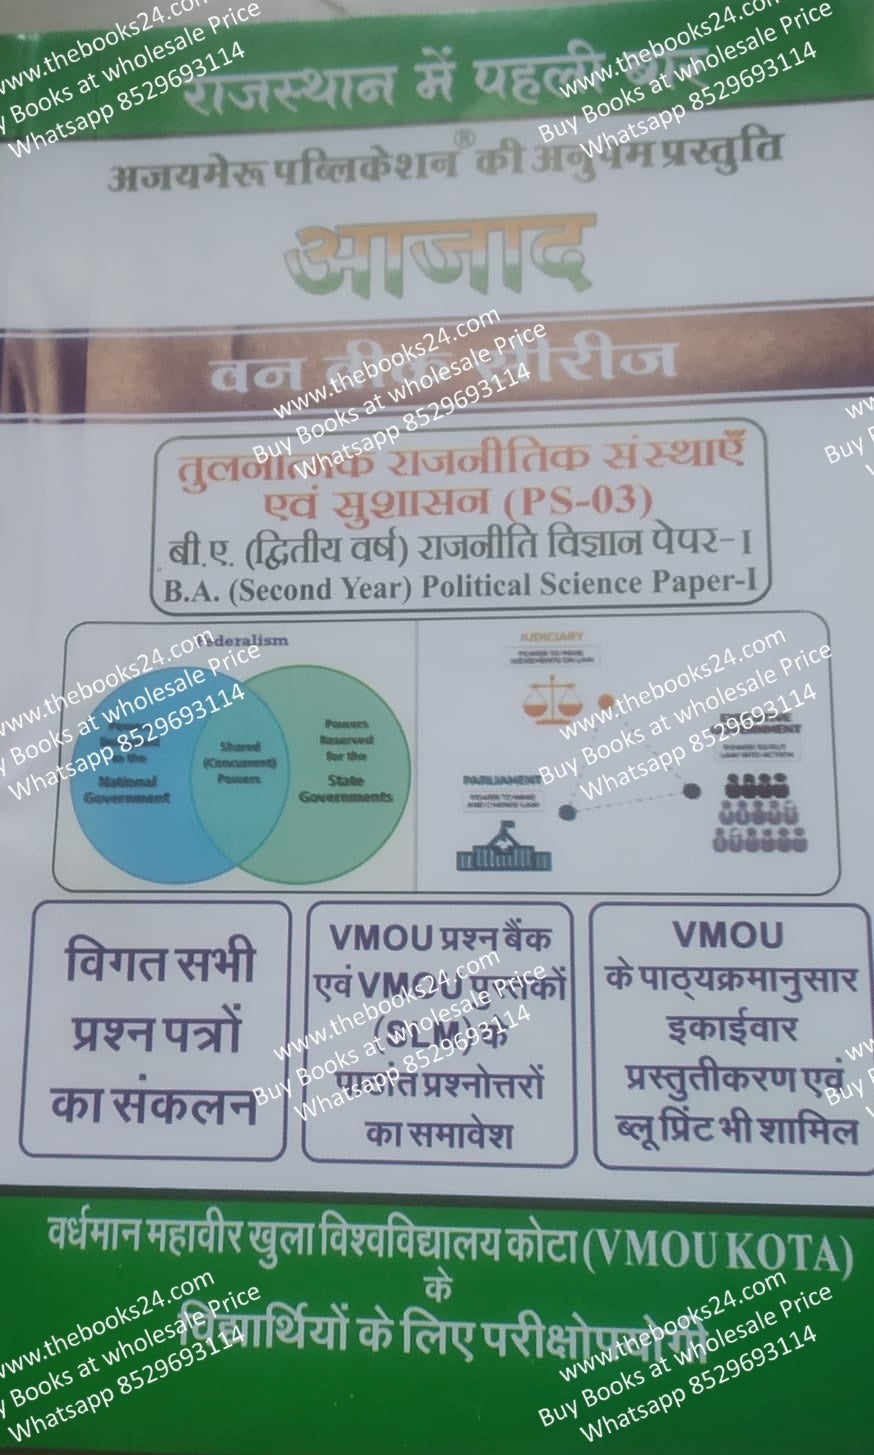 Azad VMOU Kota B.A (Second year) Political Science Paper-I Tulnatmak rajnitik sansthaen AVN sushasan (PS-03)